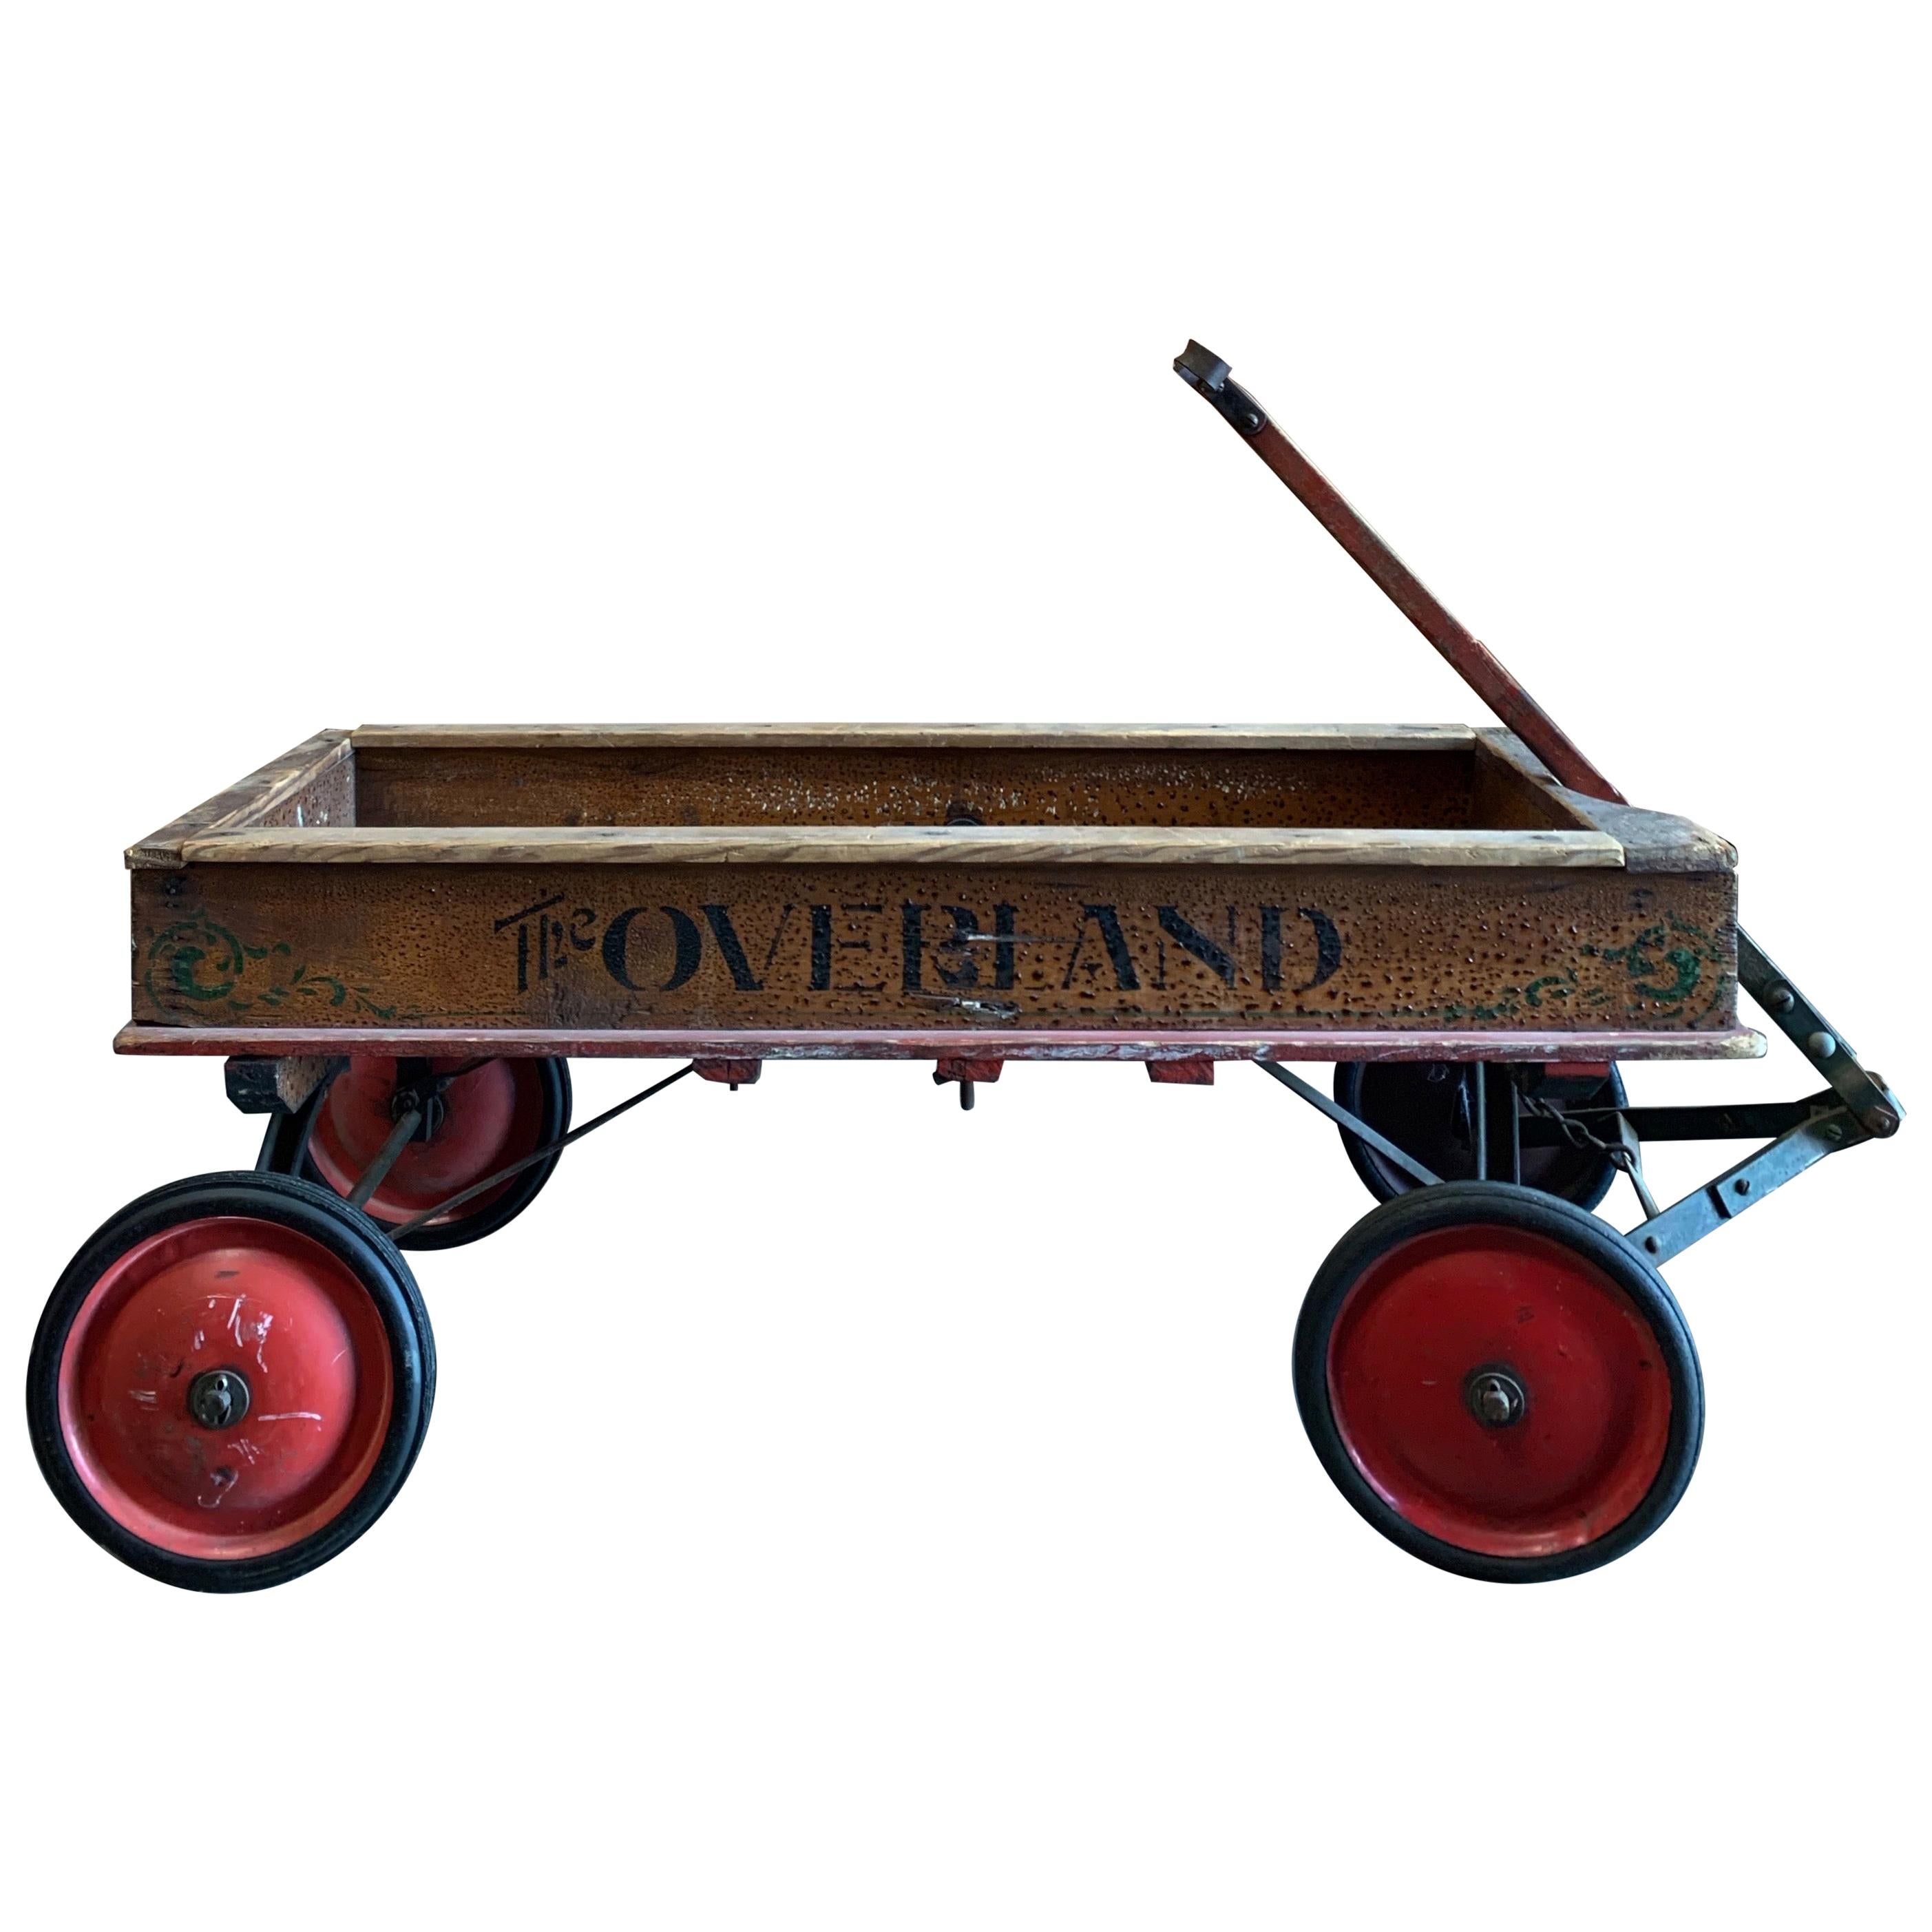 Hunt, Helm, Ferris & Company vintage "The Overland" wagon